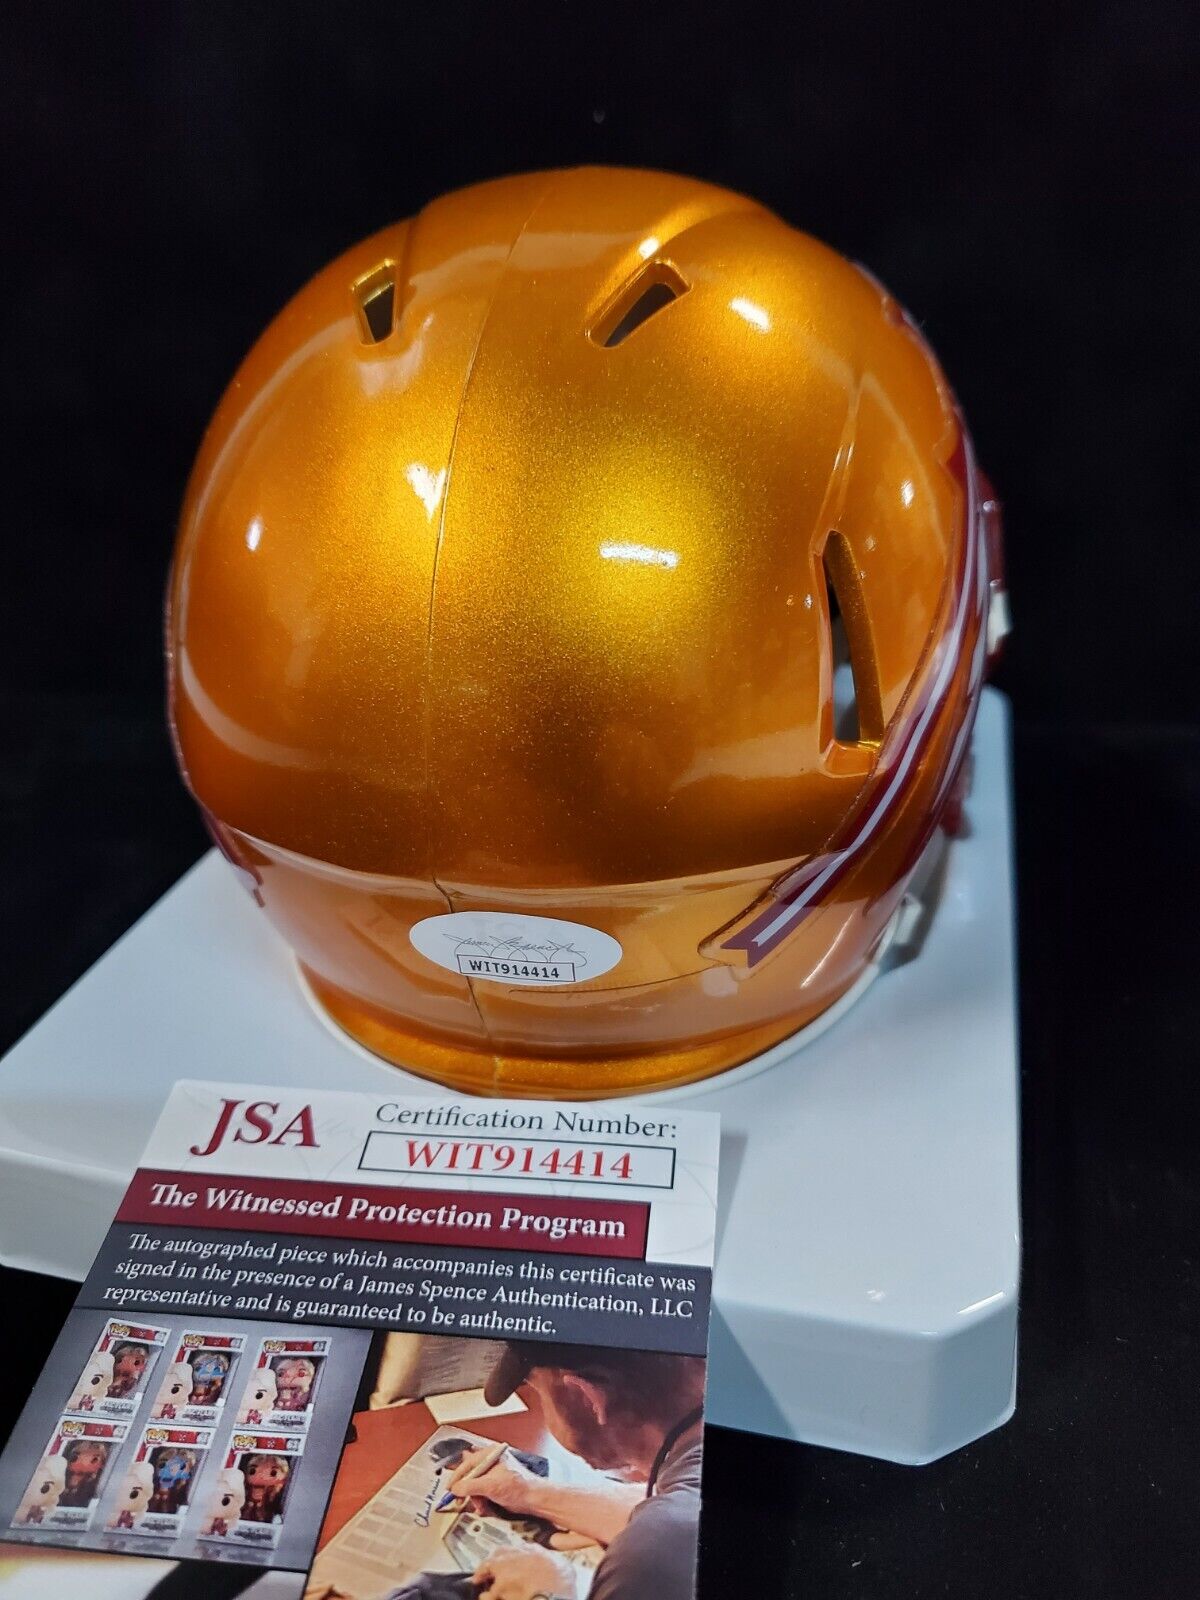 MVP Authentics Florida State Seminoles Jalen Ramsey Autographed Flash Mini Helmet Jsa Coa 184.50 sports jersey framing , jersey framing